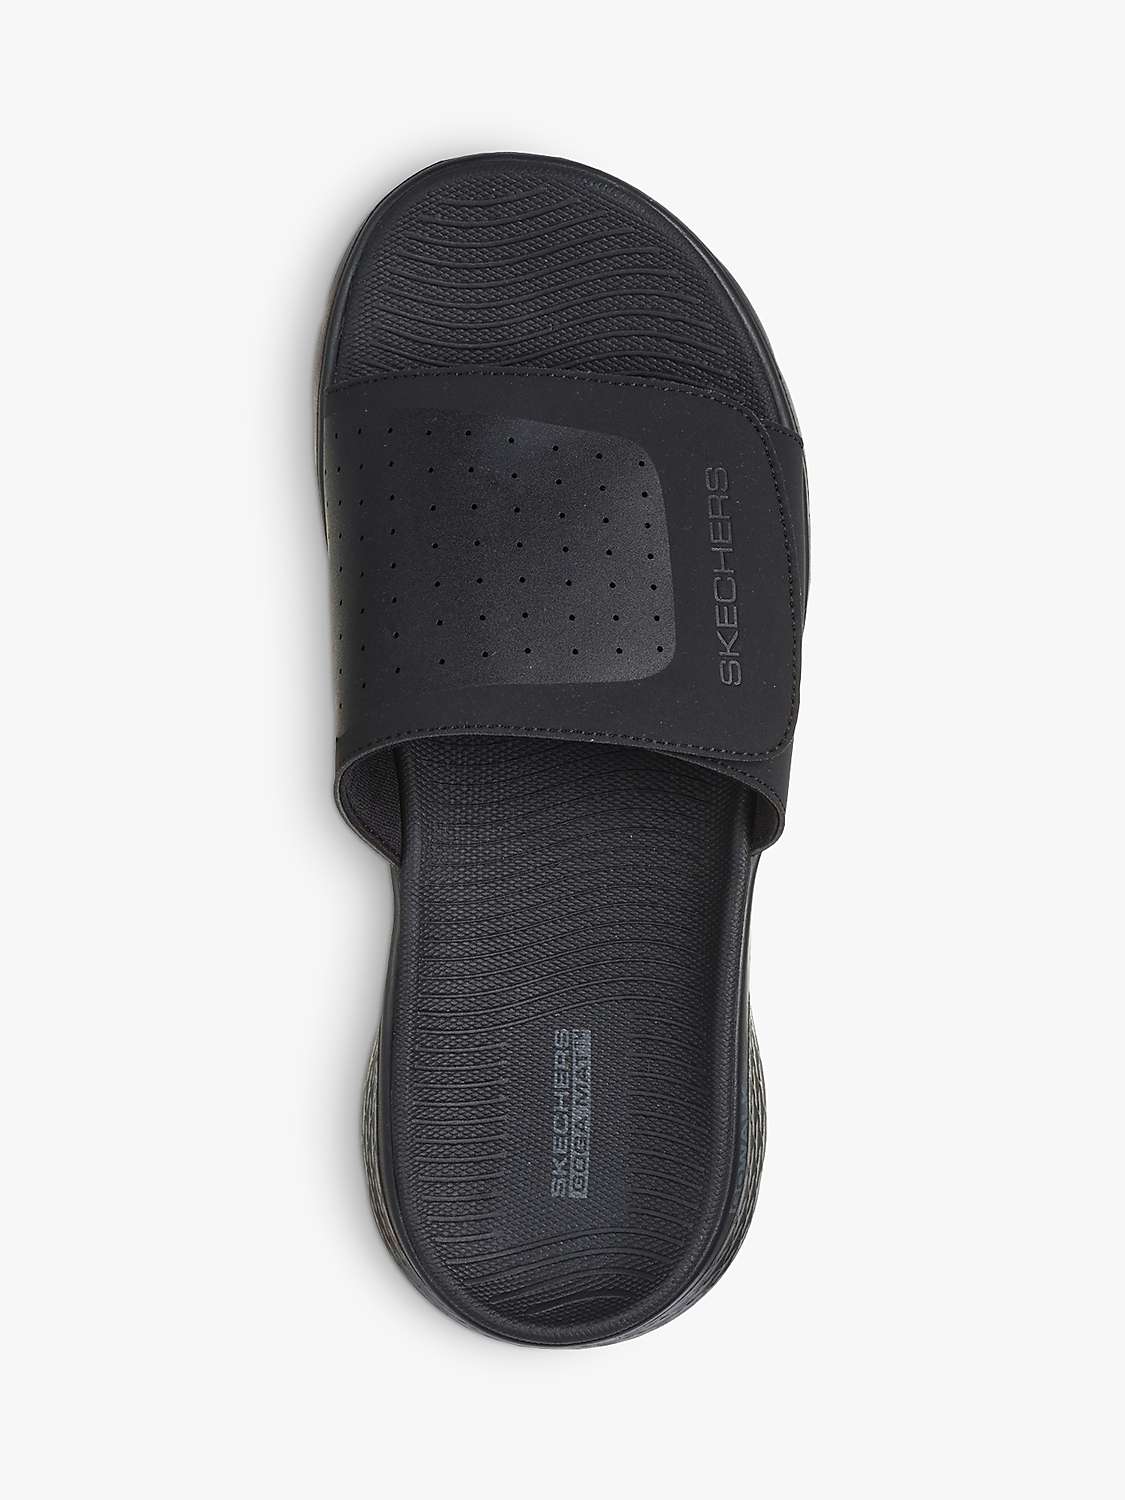 Buy Skechers Go Walk Flex Sandbar Sandal, Black Online at johnlewis.com